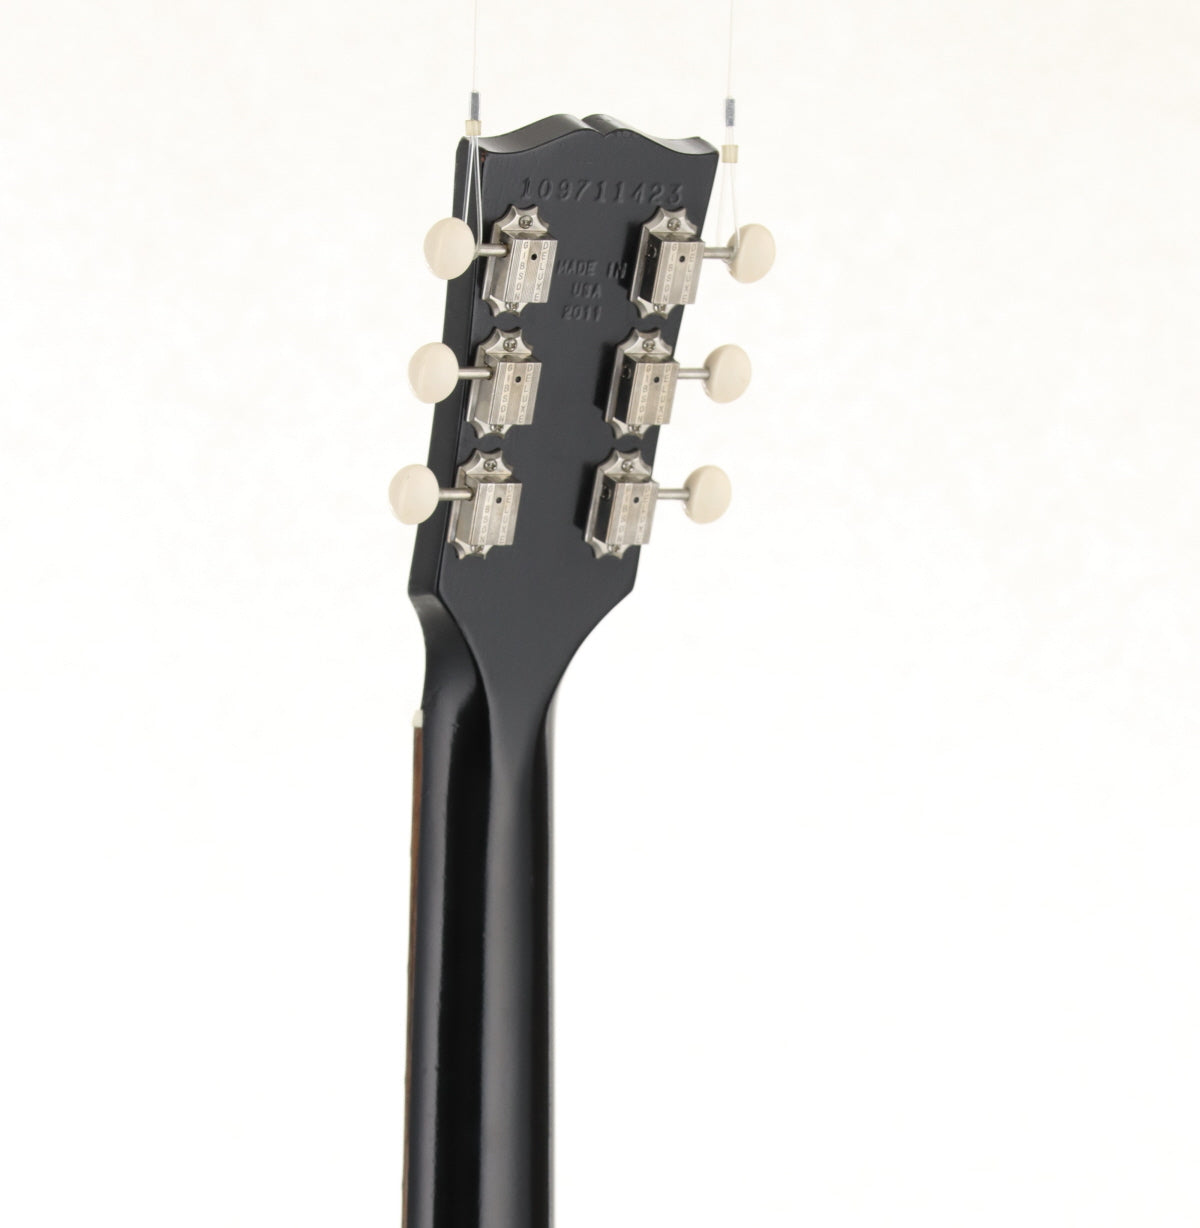 [SN 109711423] USED Gibson / Les Paul Junior Ebony [03]